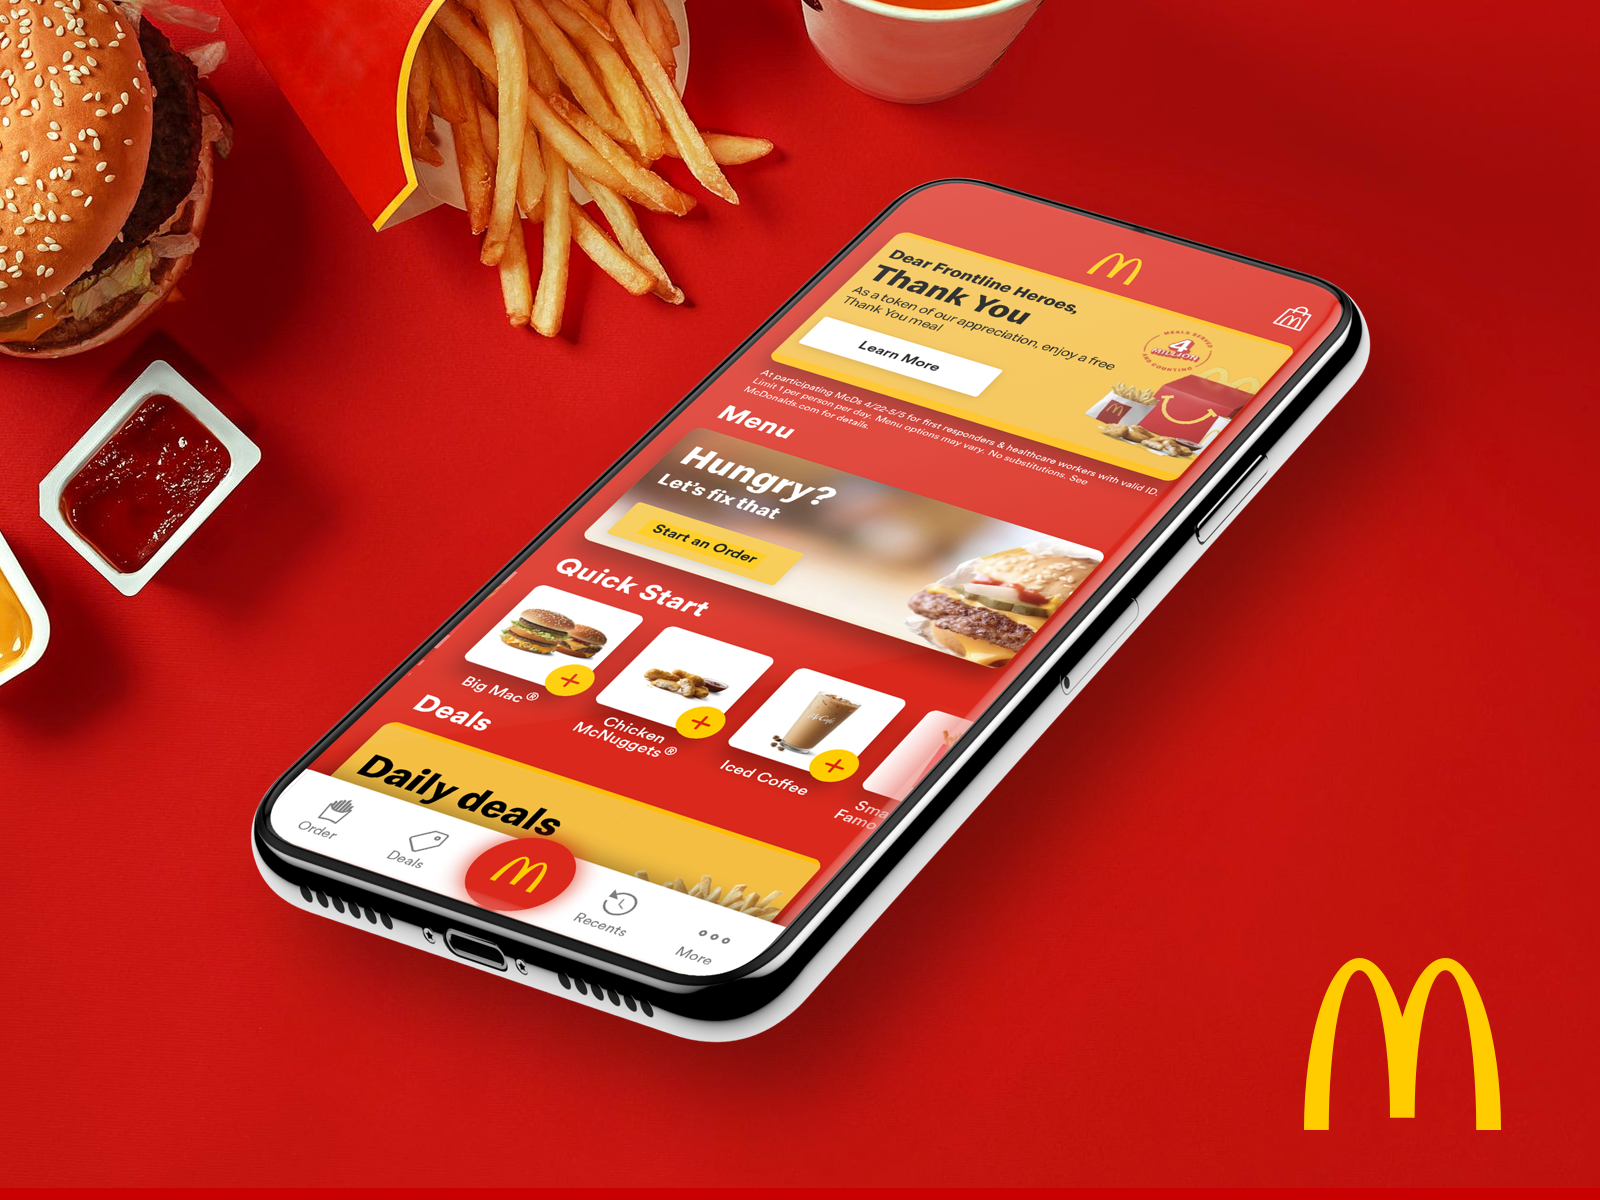 McDonald's Concept App by Jake Brovda on Dribbble